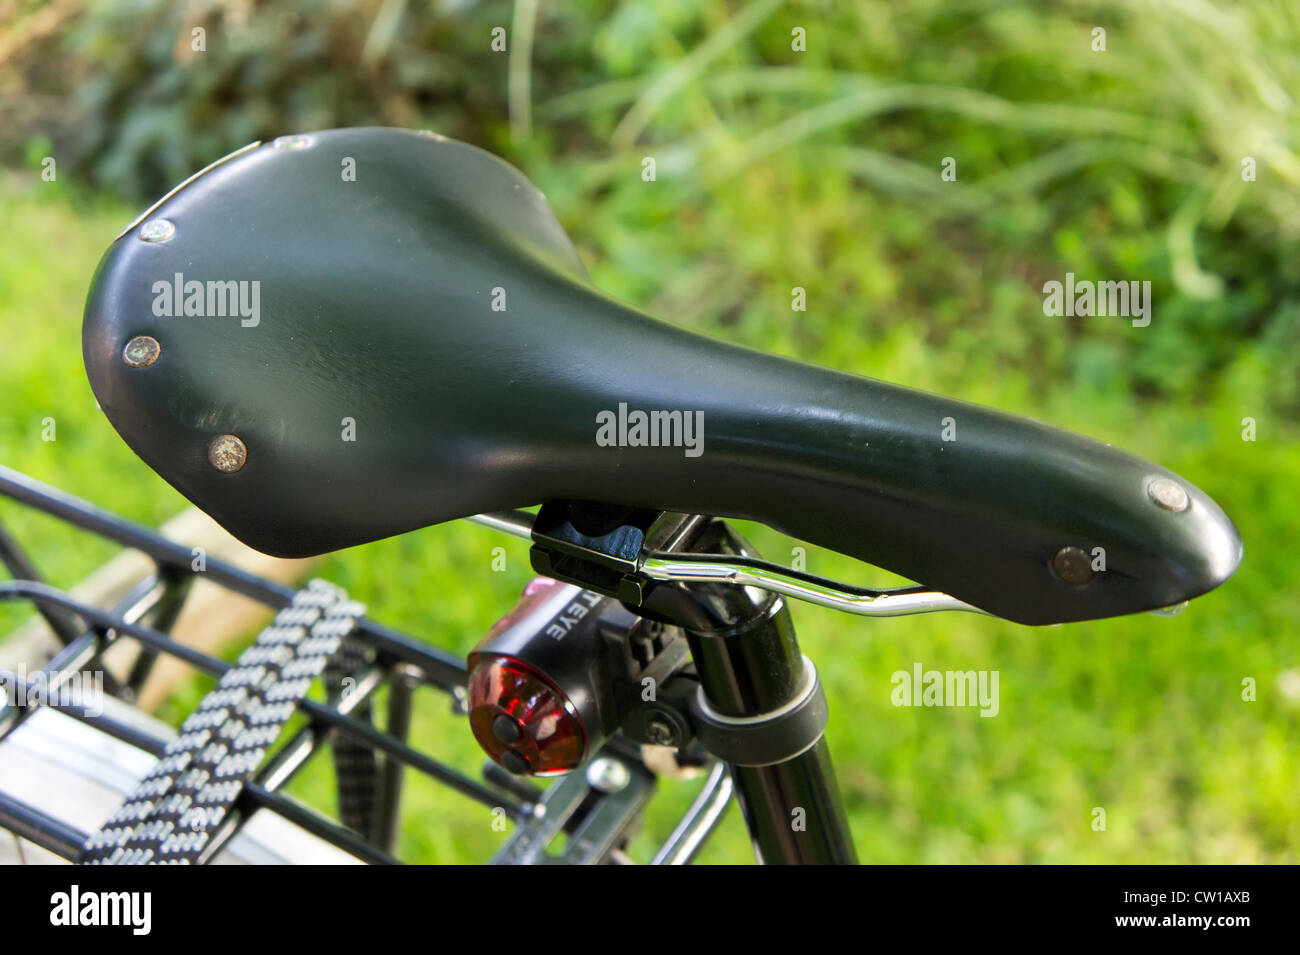 Brooks Swallow leather bicycle saddle Stock Photo - Alamy